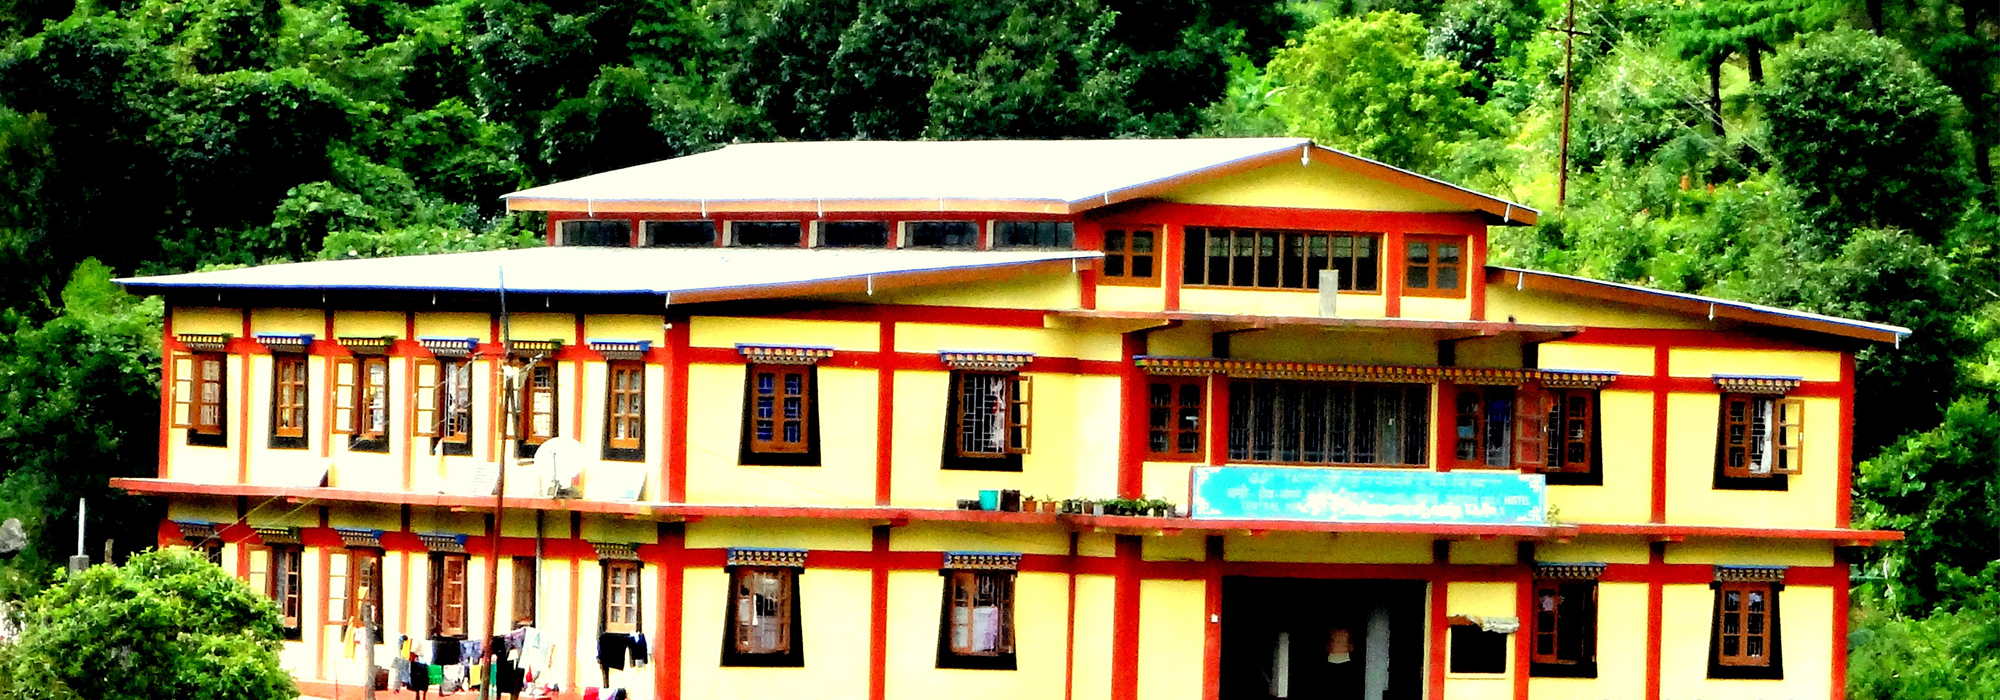 Central Institute of Buddhist Studies